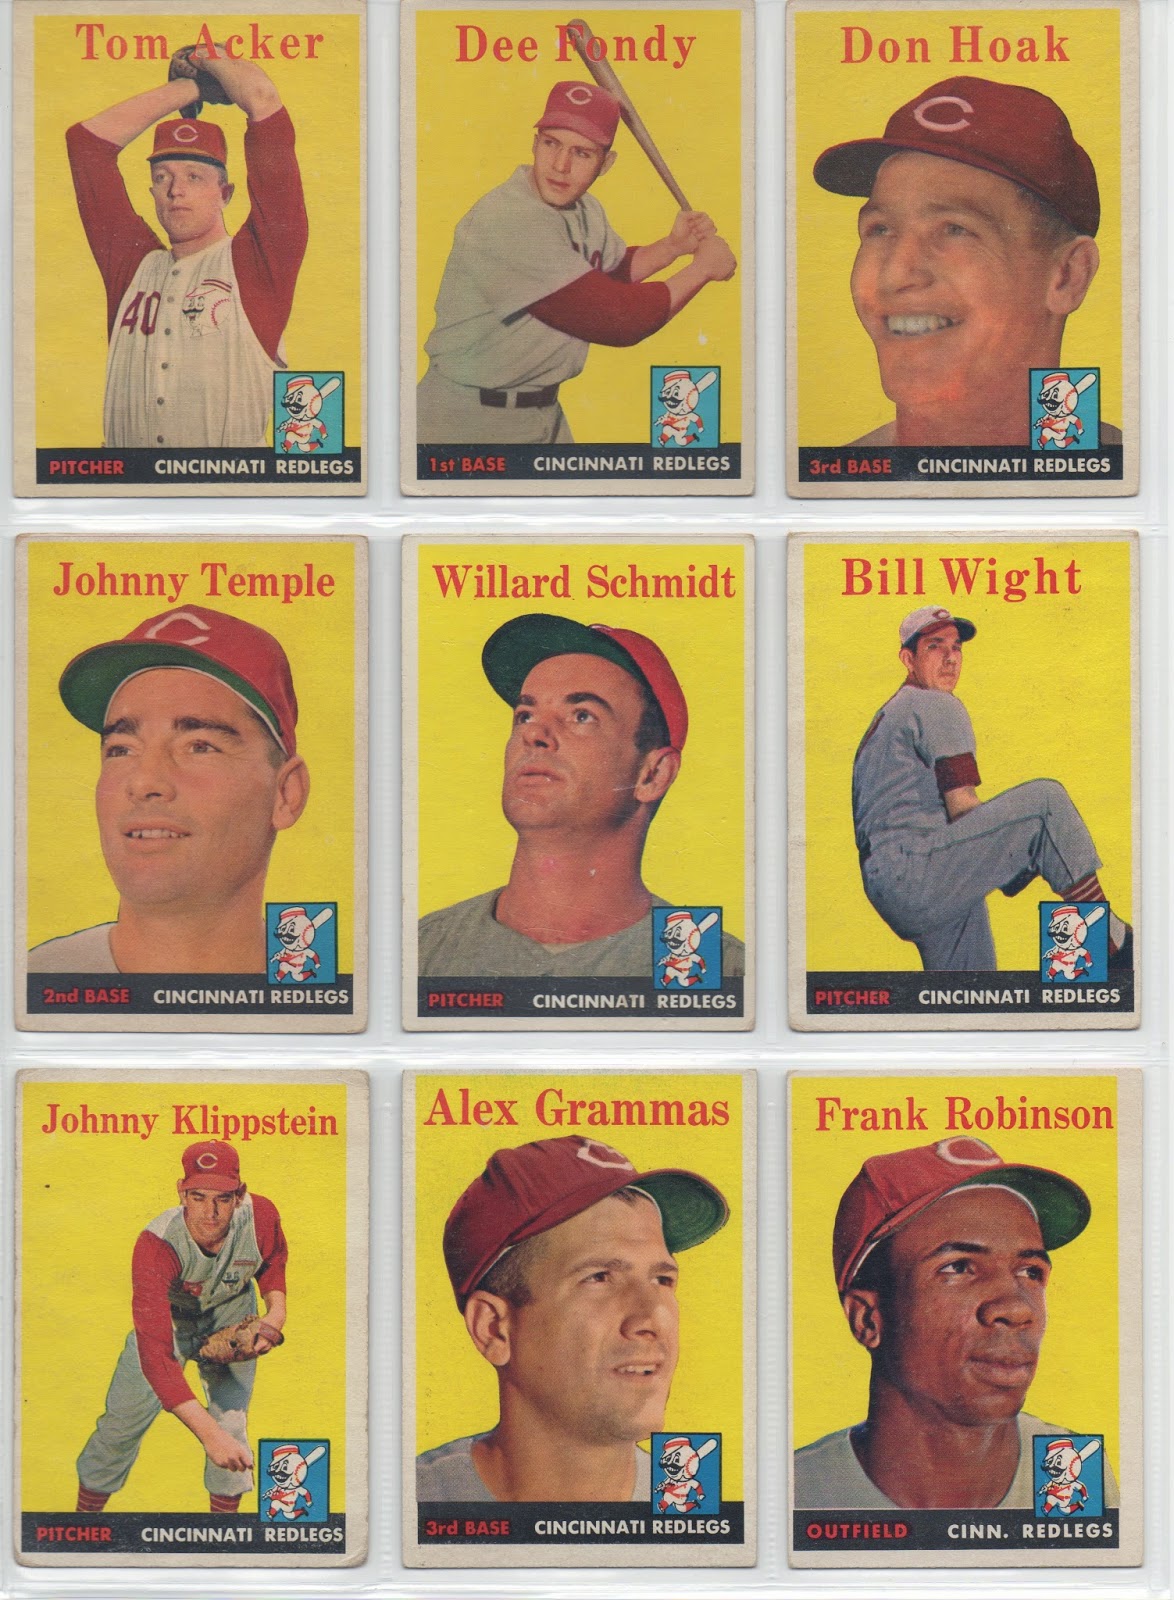 Cincinnati Reds Baseball Card Collector: 1958 Topps Cincinnati Reds Team Set